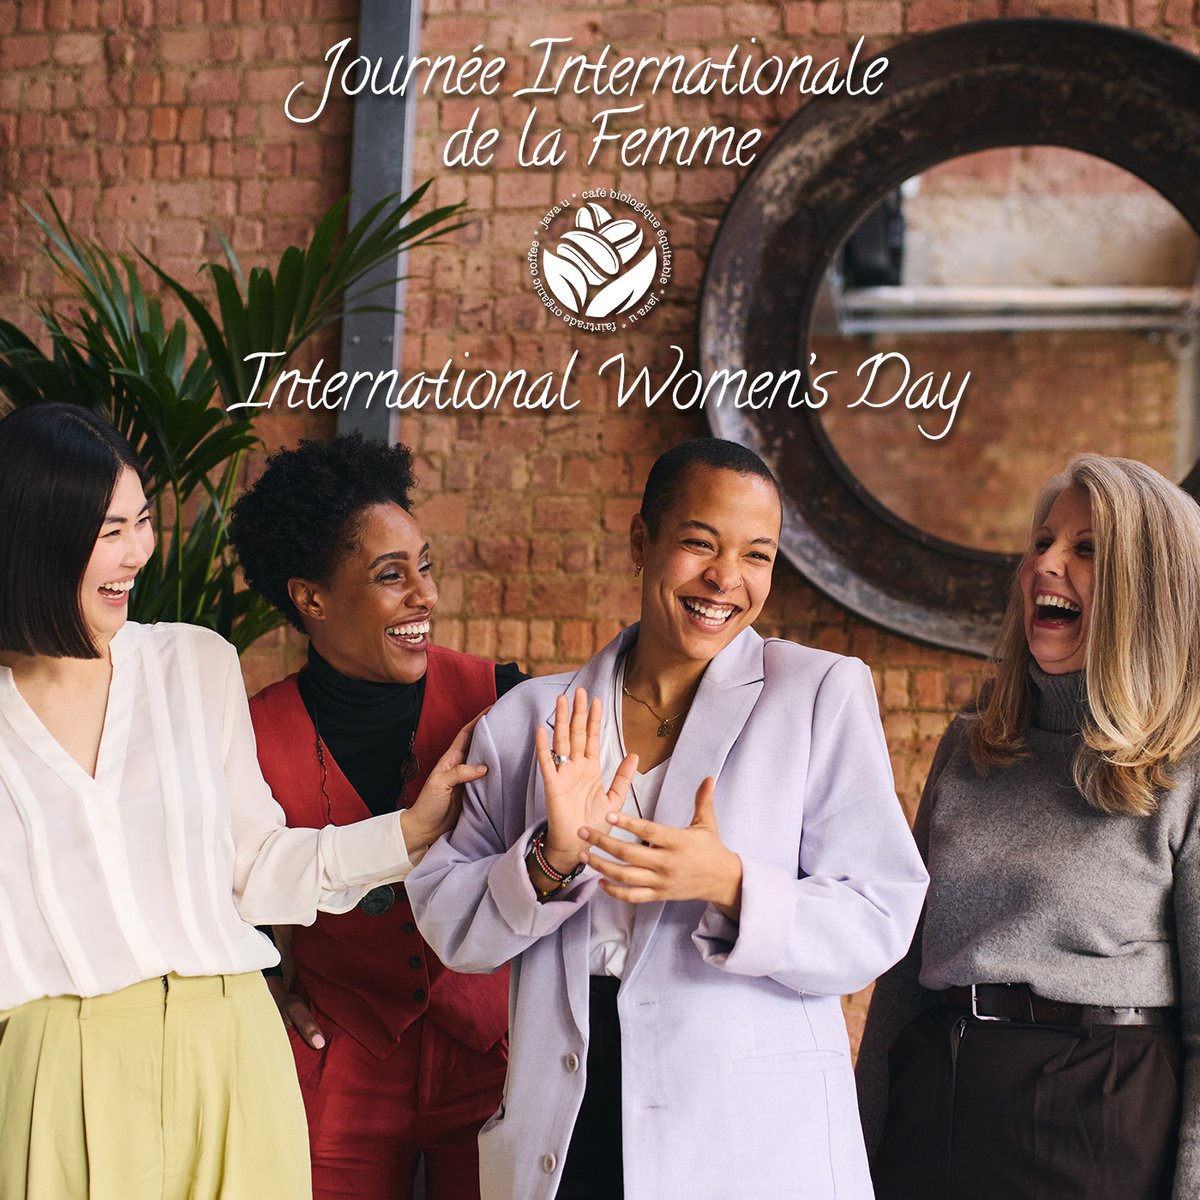 Happy International Women's Day! 💞

Joyeuse journée internationale de la femme! 💞

#javau #fairtradeorganic #montreal #coffee #cafe #fresh #coffeeshop #mtlcafe #instadaily #internationalwomensday #womenempowerment